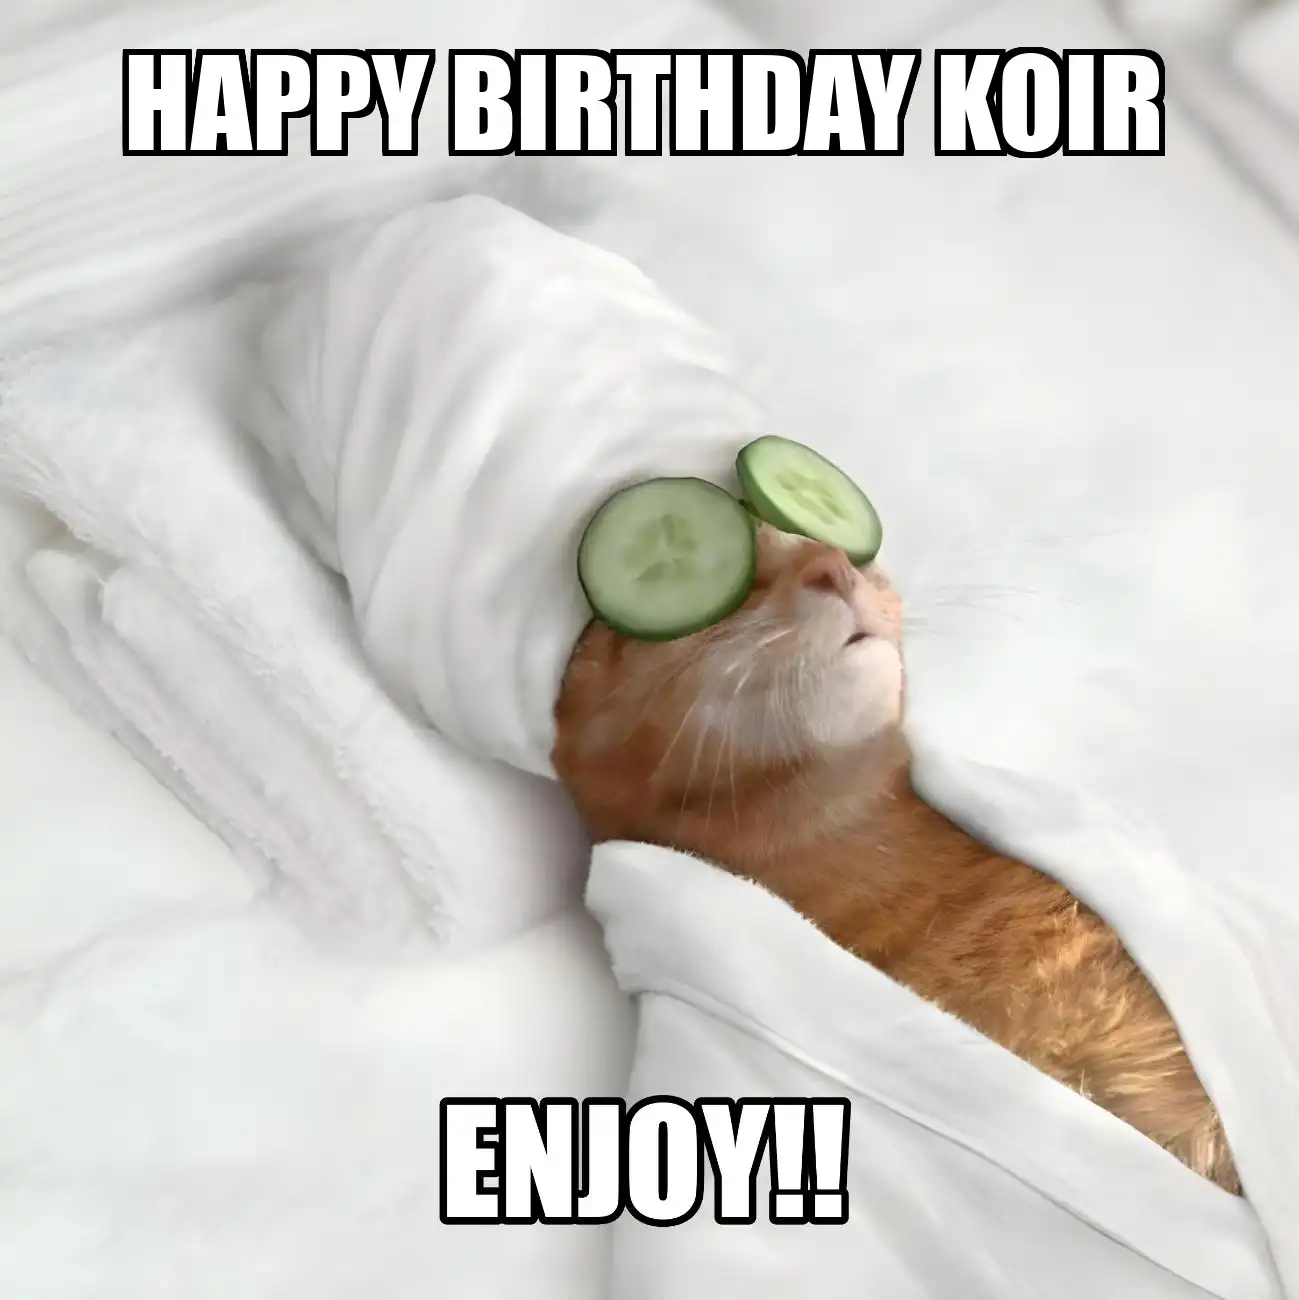 Happy Birthday Koir Enjoy Cat Meme